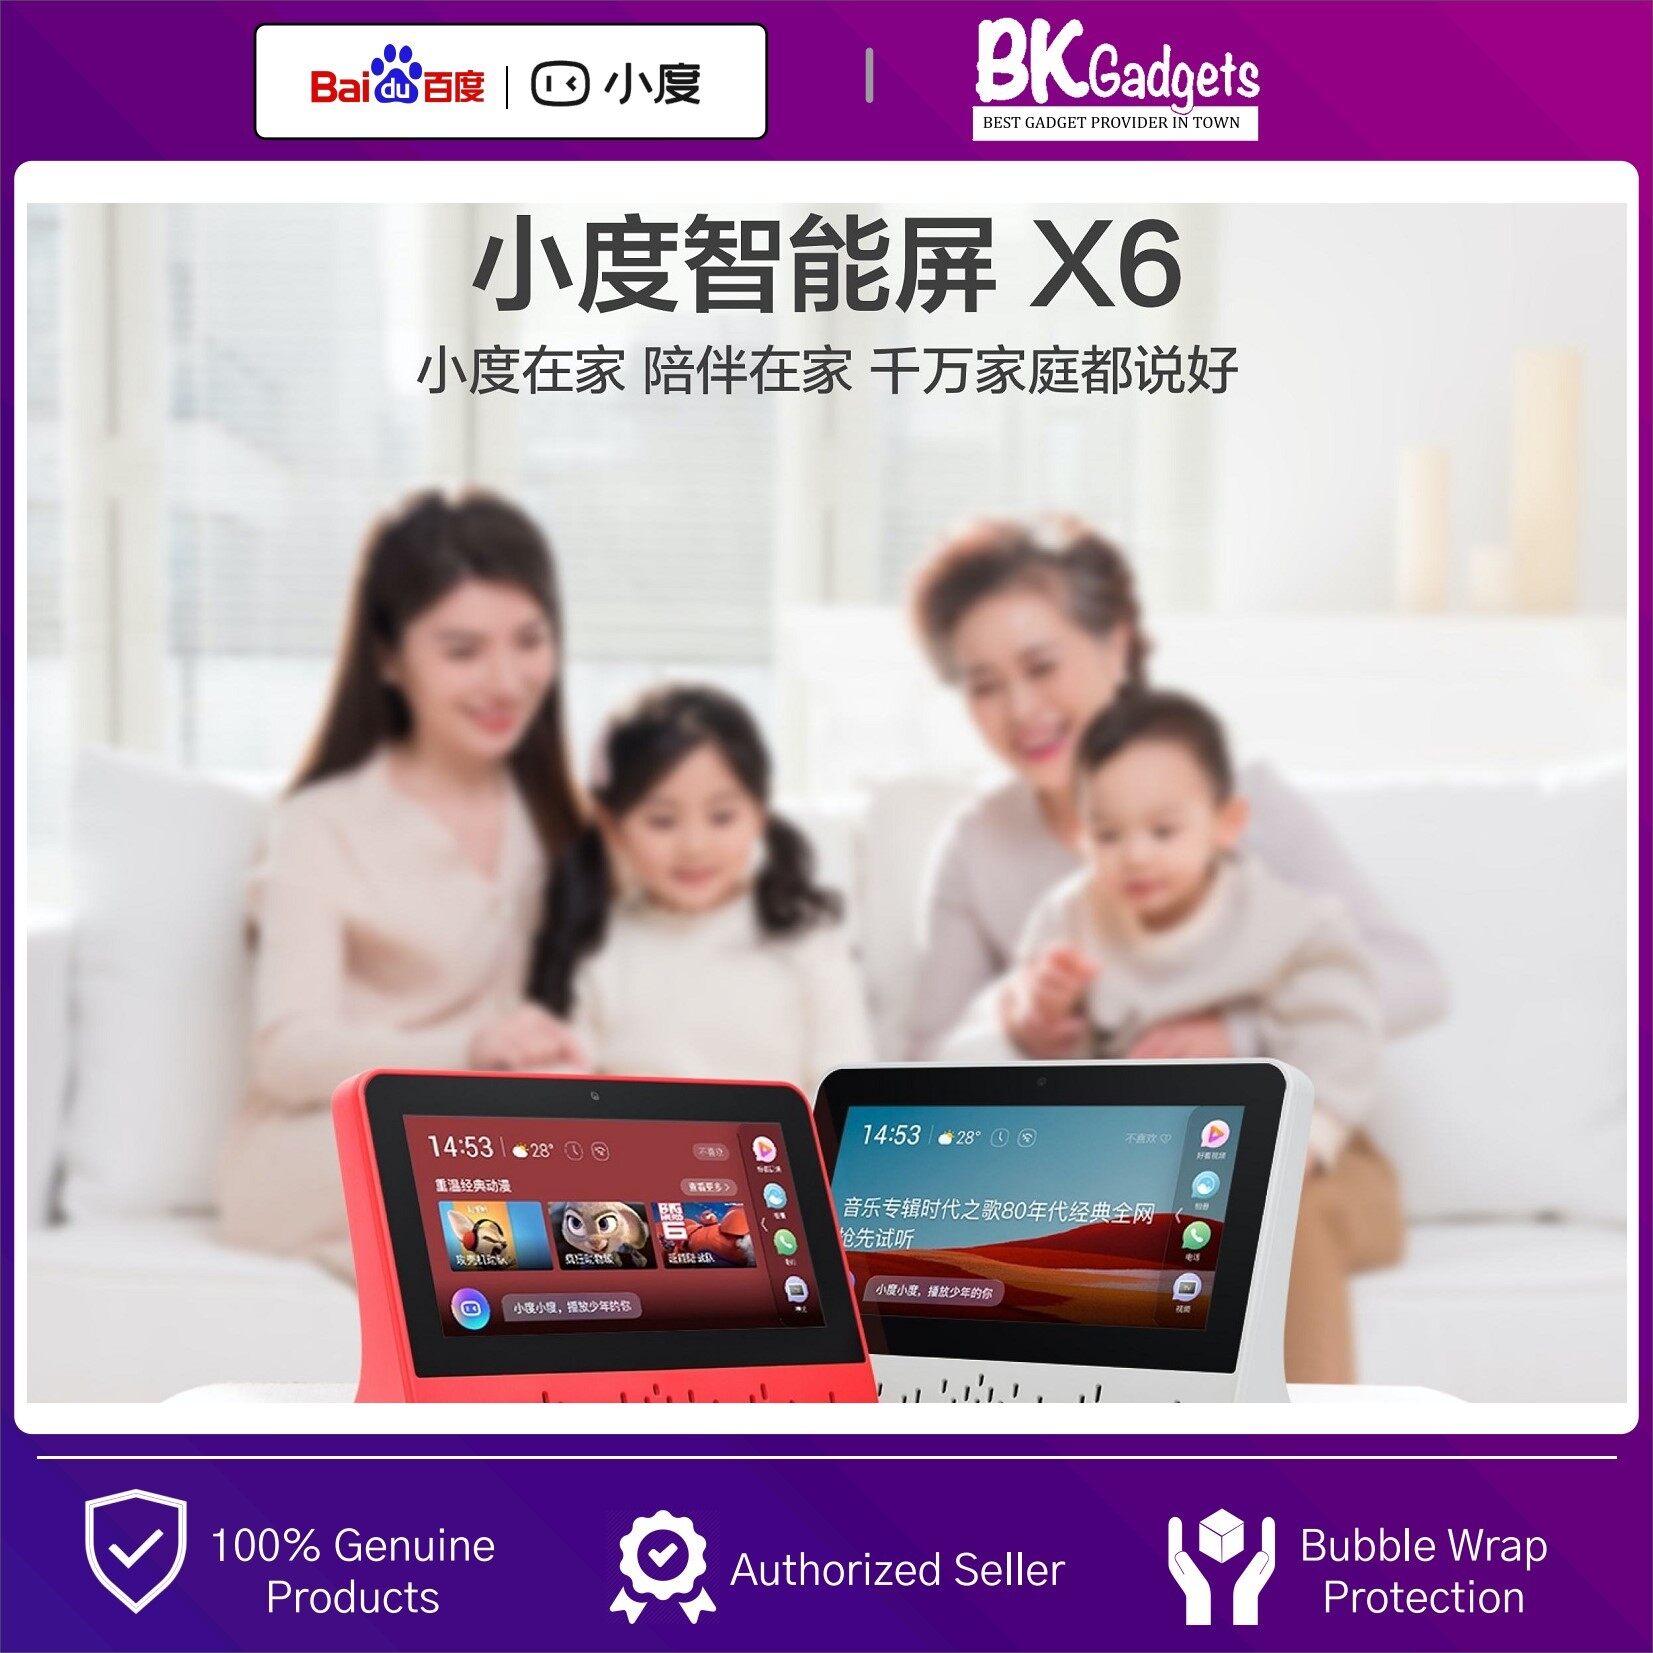 Baidu Xiaodu X6 [ Build in XiaoDu Smart Assistant ] 5.45” Touch Screen Smart AI Speaker | Voice Control | 1 Year Malaysia Warranty